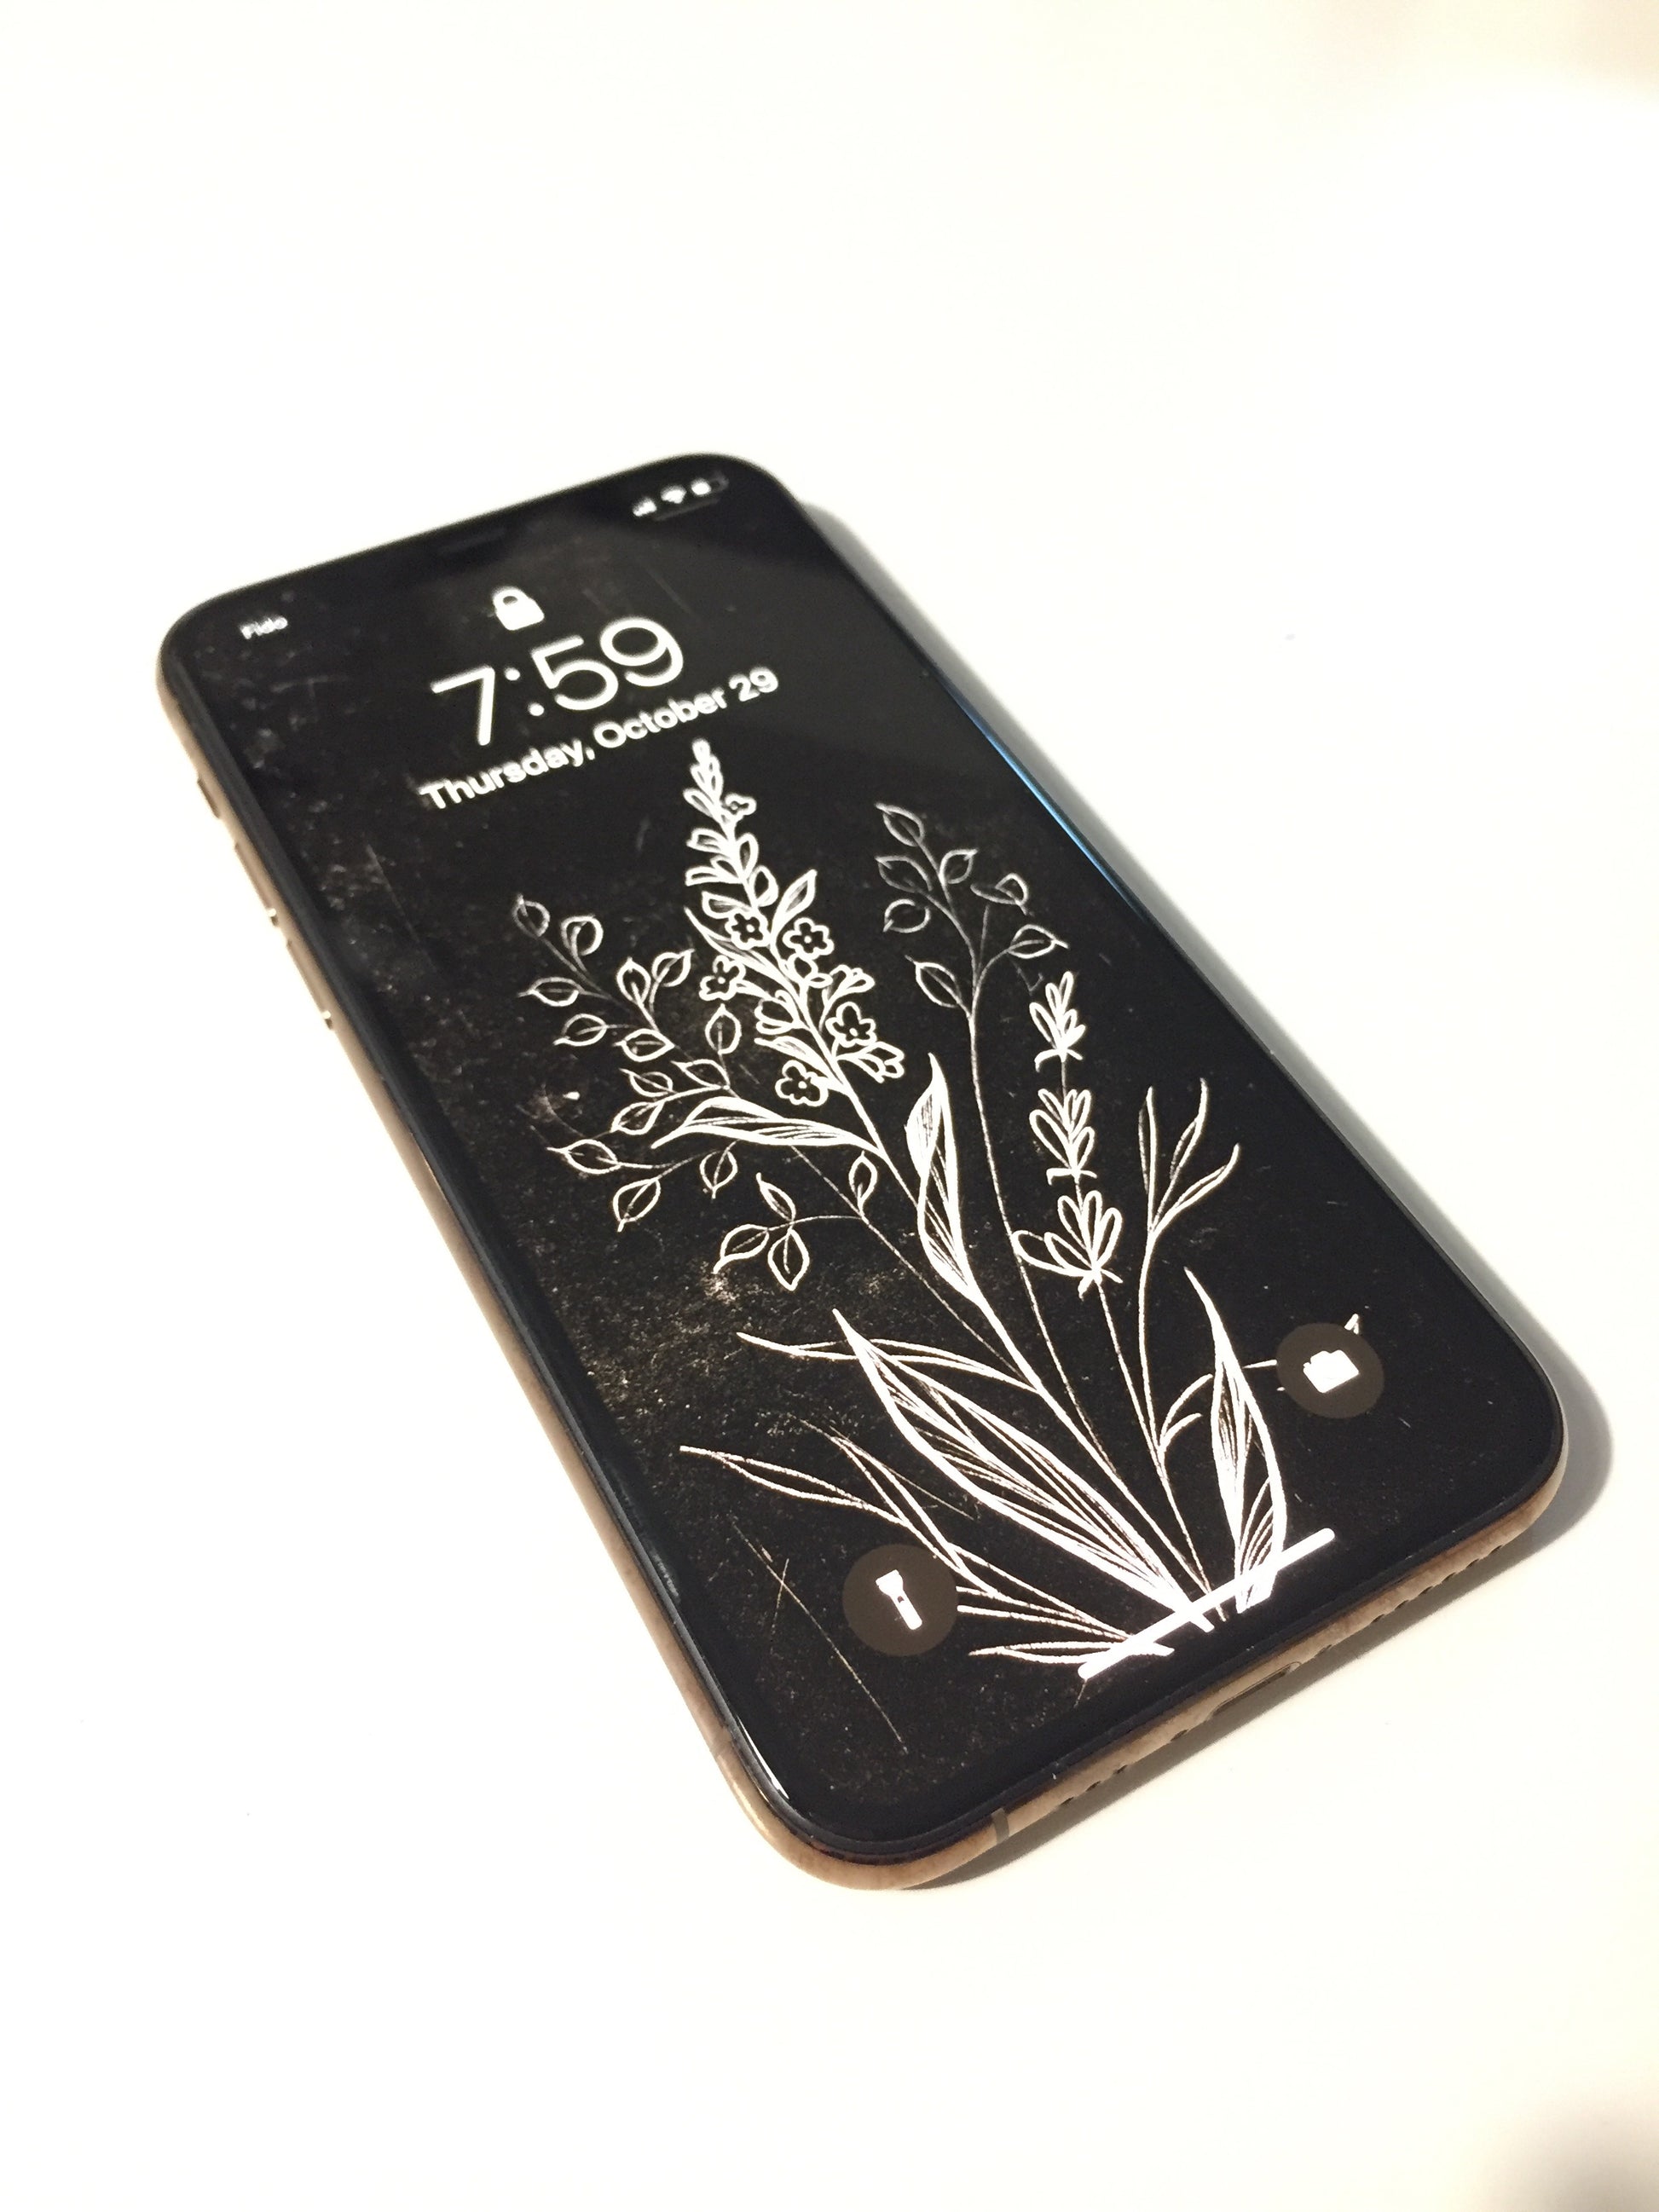 Beautiful wildflower illustration phone background, white florals on black, by Lu Loram-Martin. Toronto tattoo artist and illustration